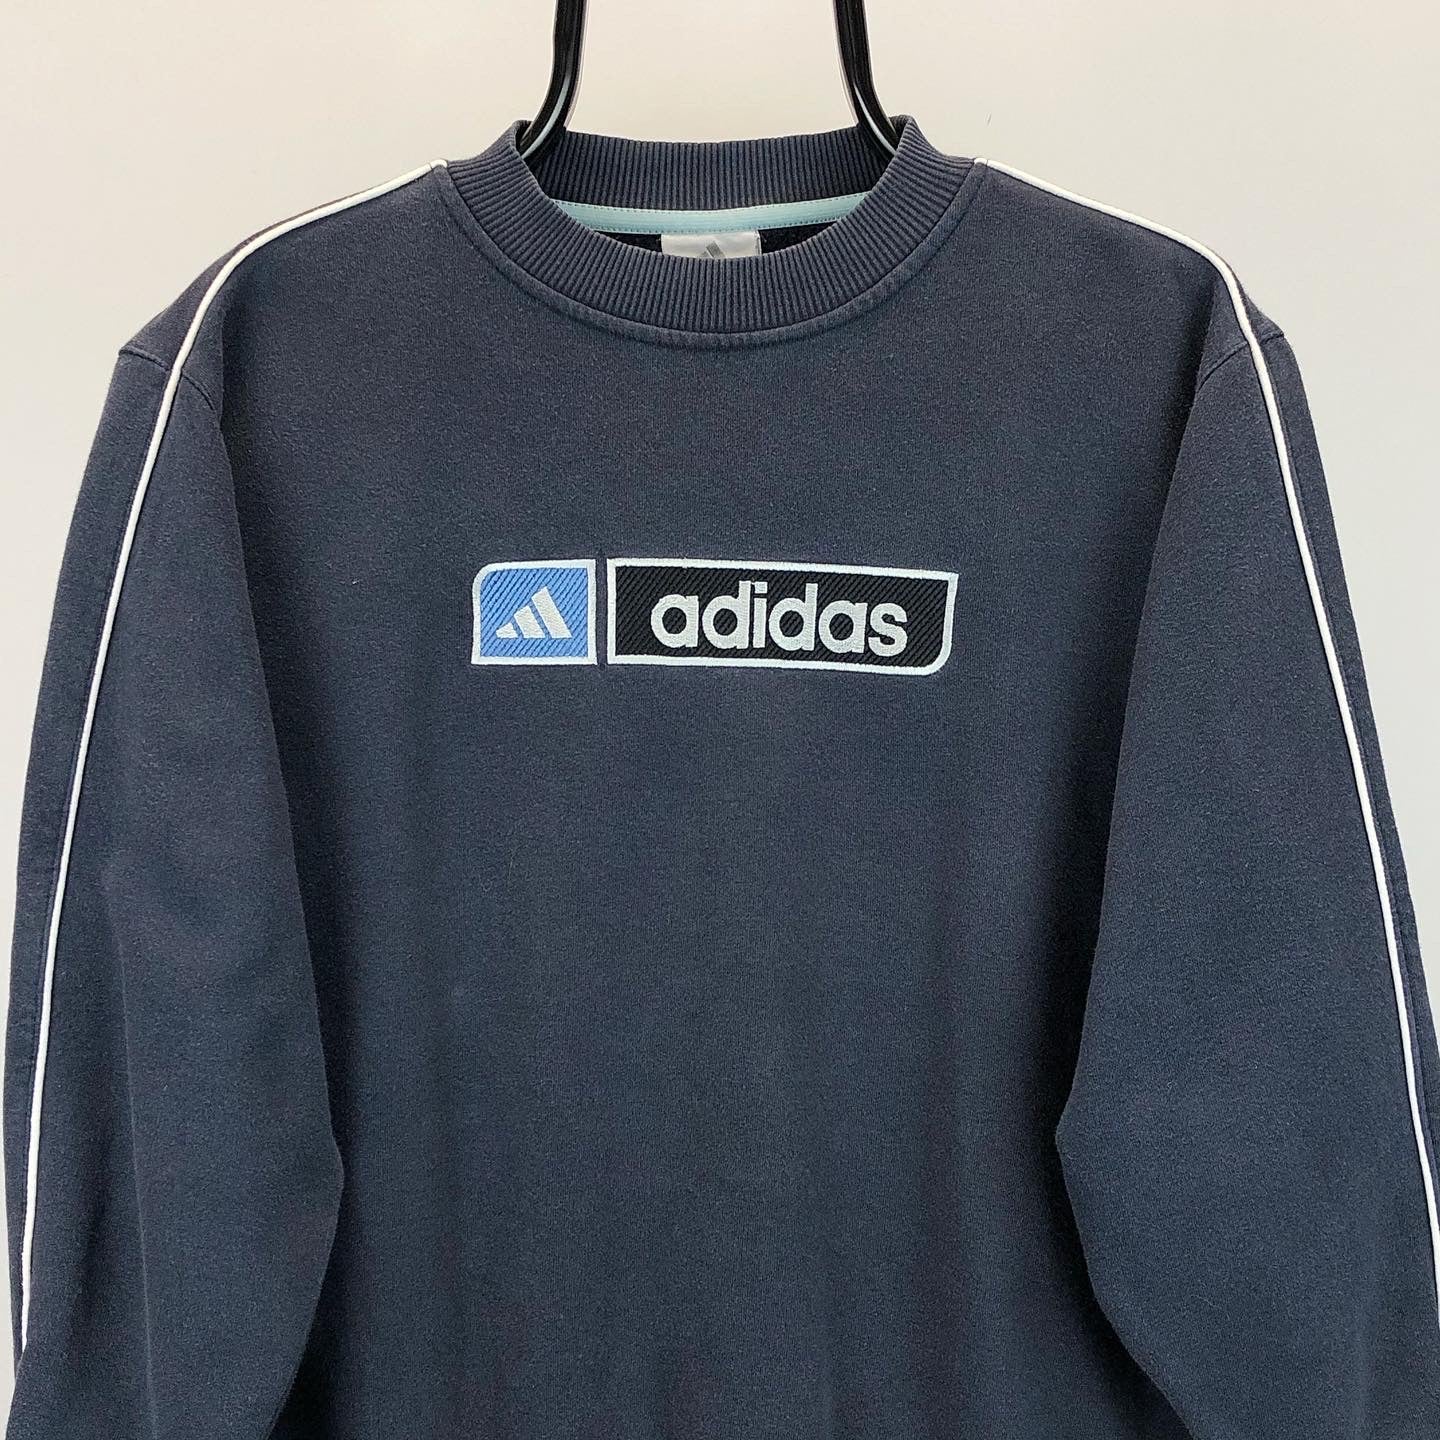 Vintage Adidas Spellout Sweatshirt in Navy - Men’s Small/Women’s Medium